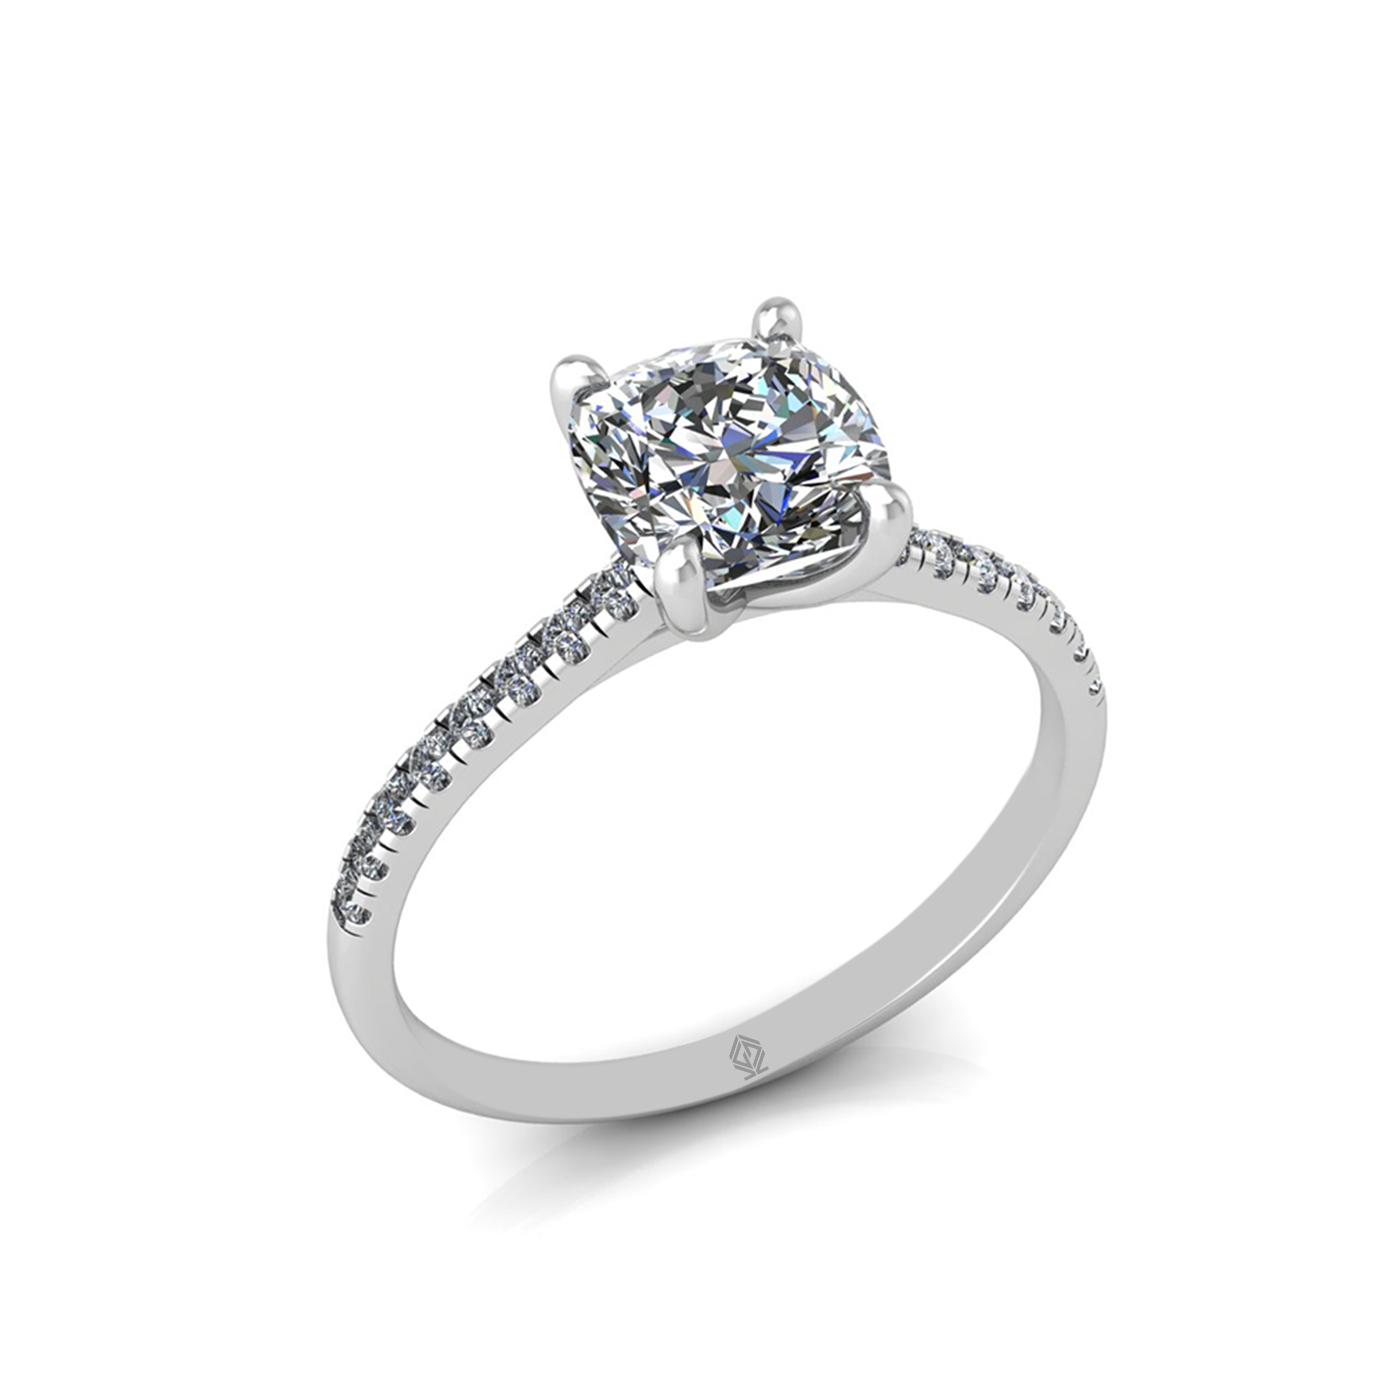 18k white gold 1.5ct 4 prongs cushion cut diamond engagement ring with whisper thin pavÉ set band